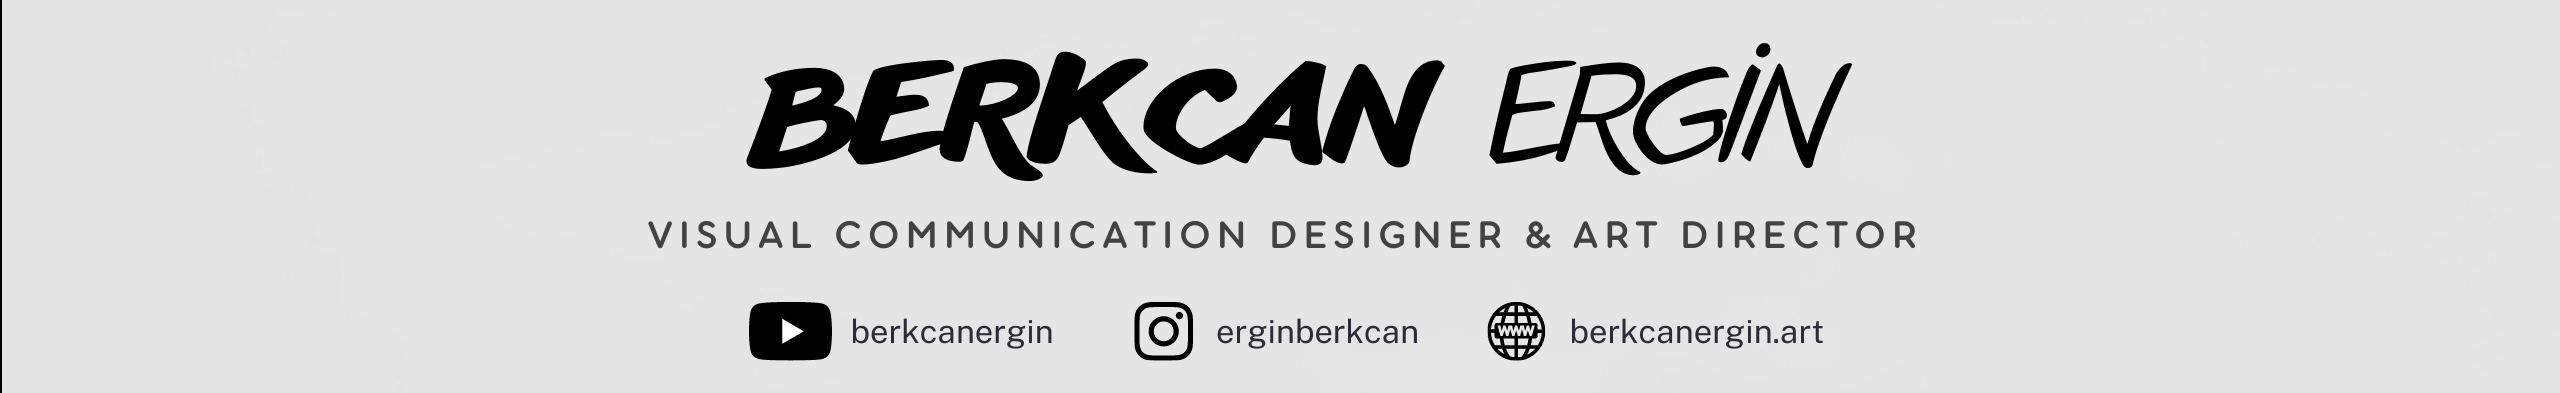 Berkcan Ergin's profile banner